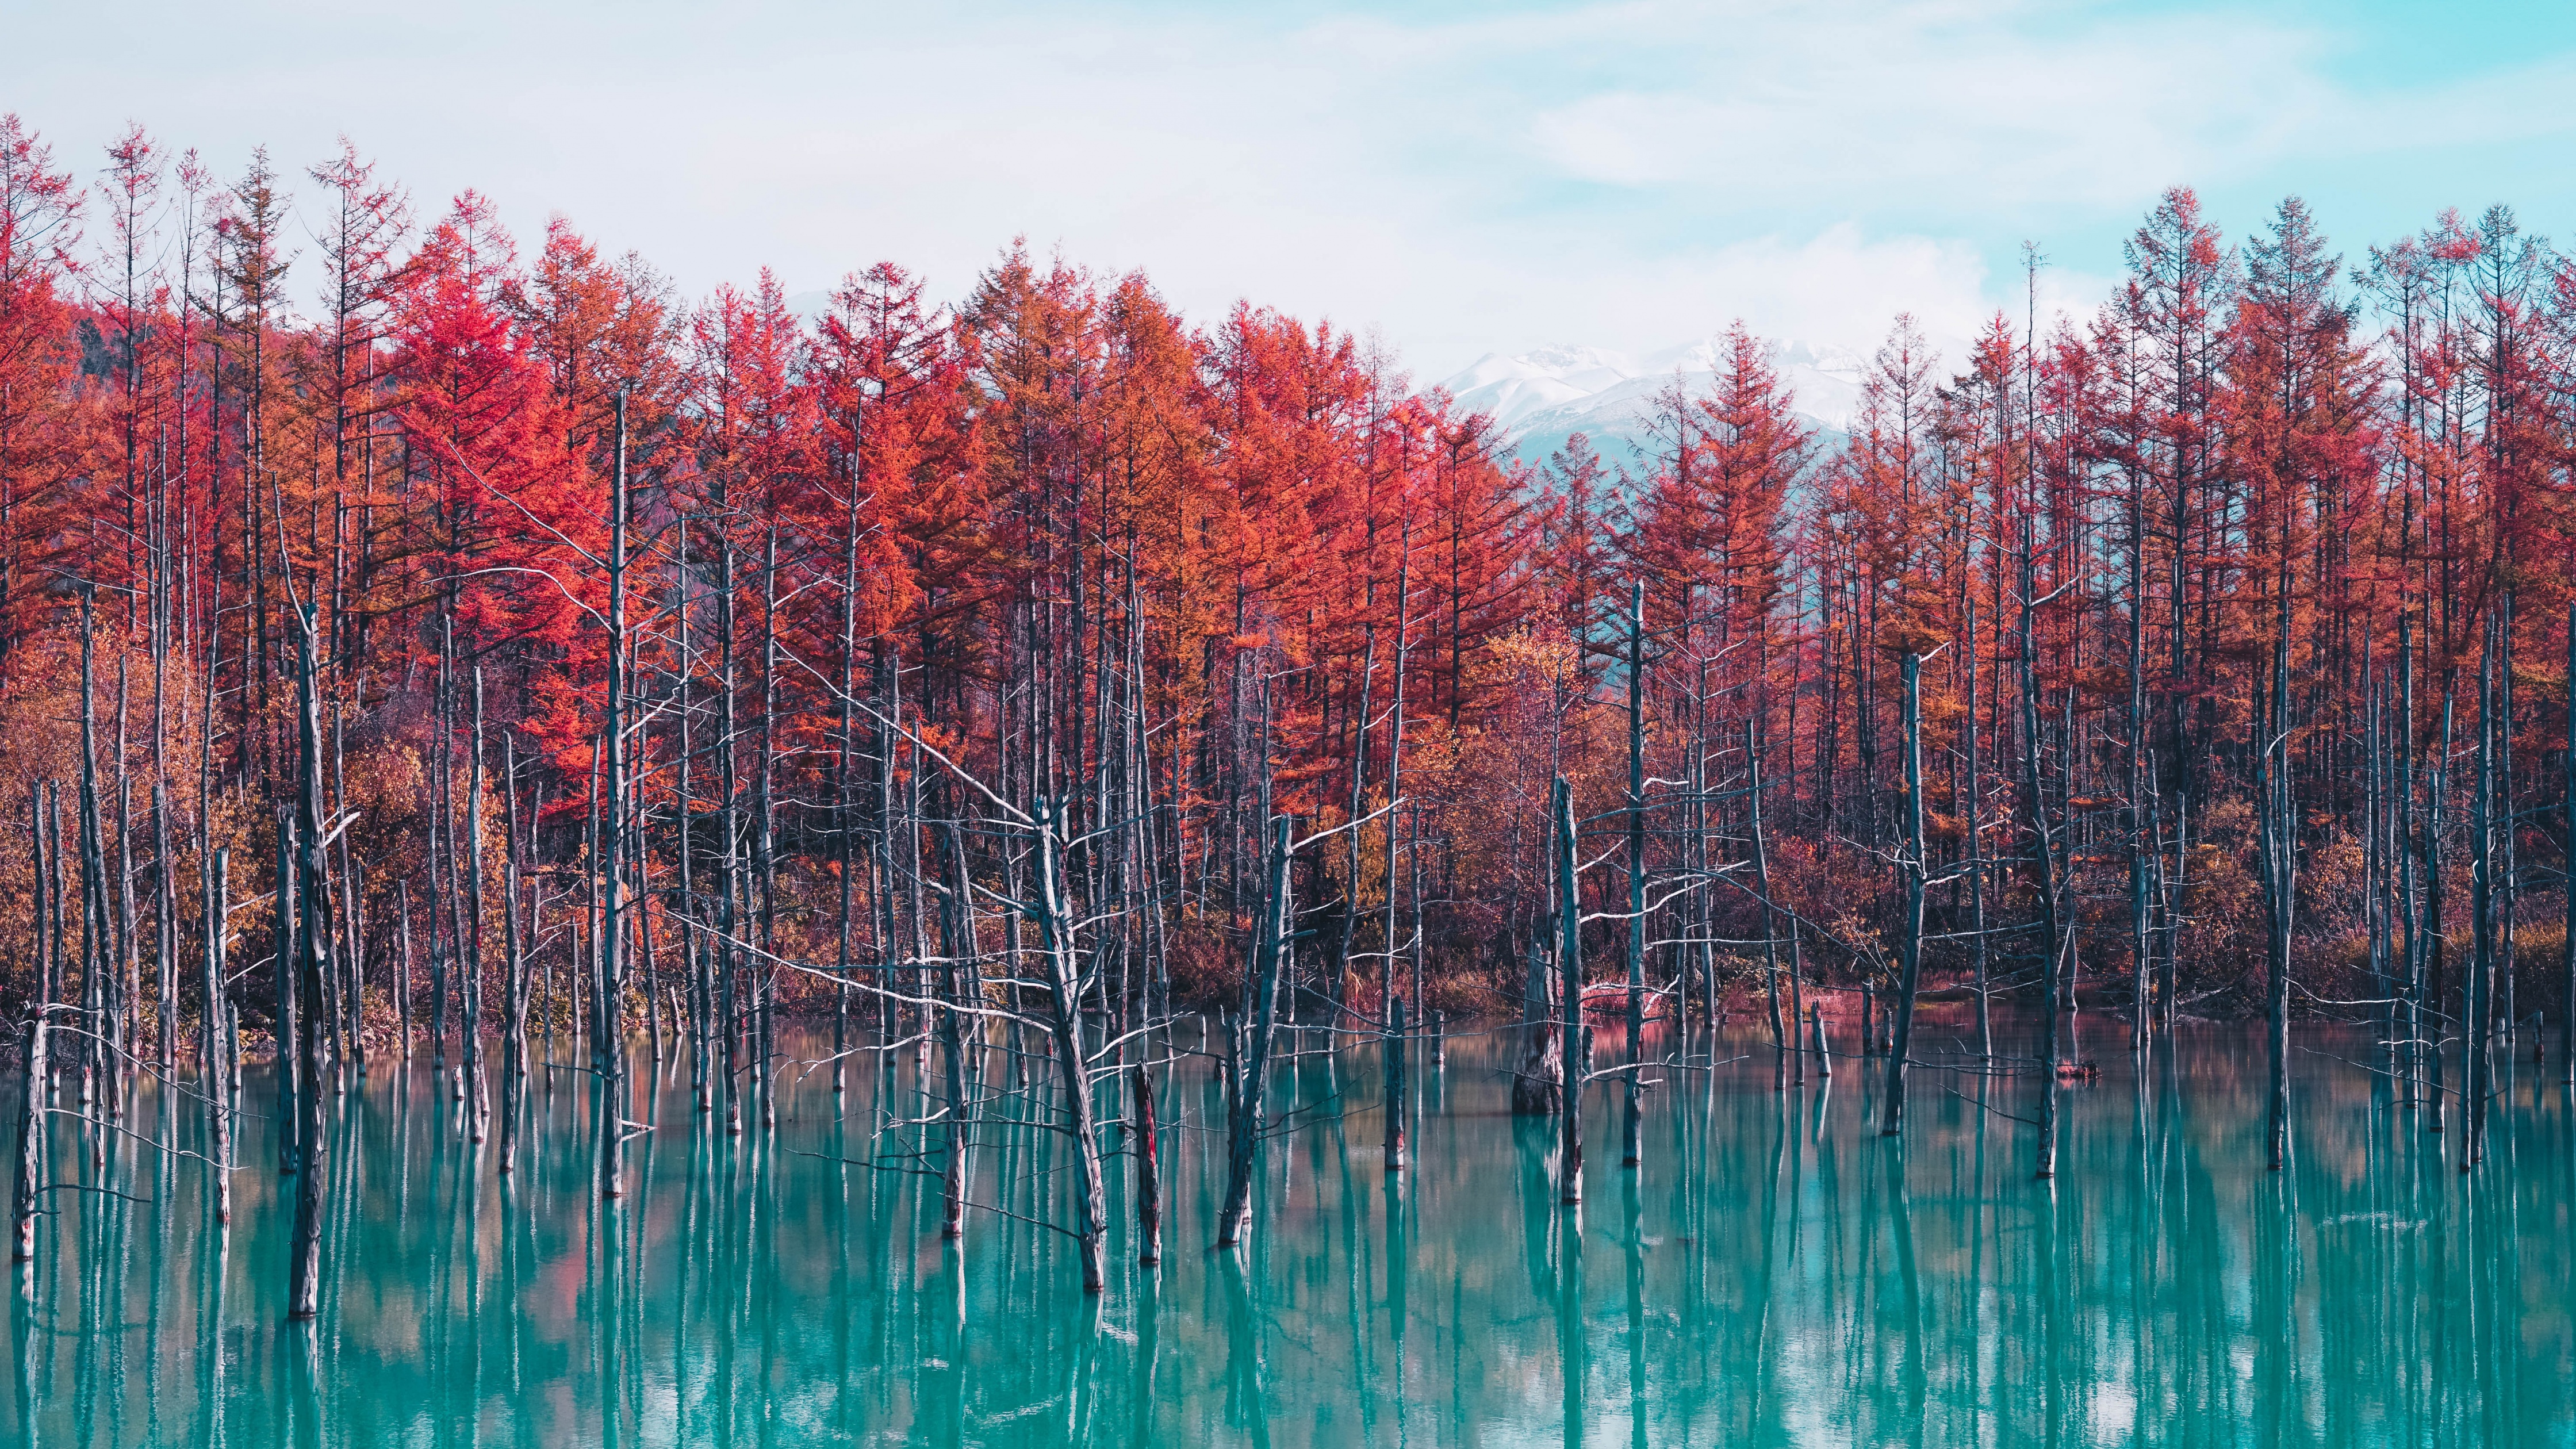 Shirogane Blue Pond Wallpaper 4K, Hokkaido, Japan, Red Trees, Autumn, Nature